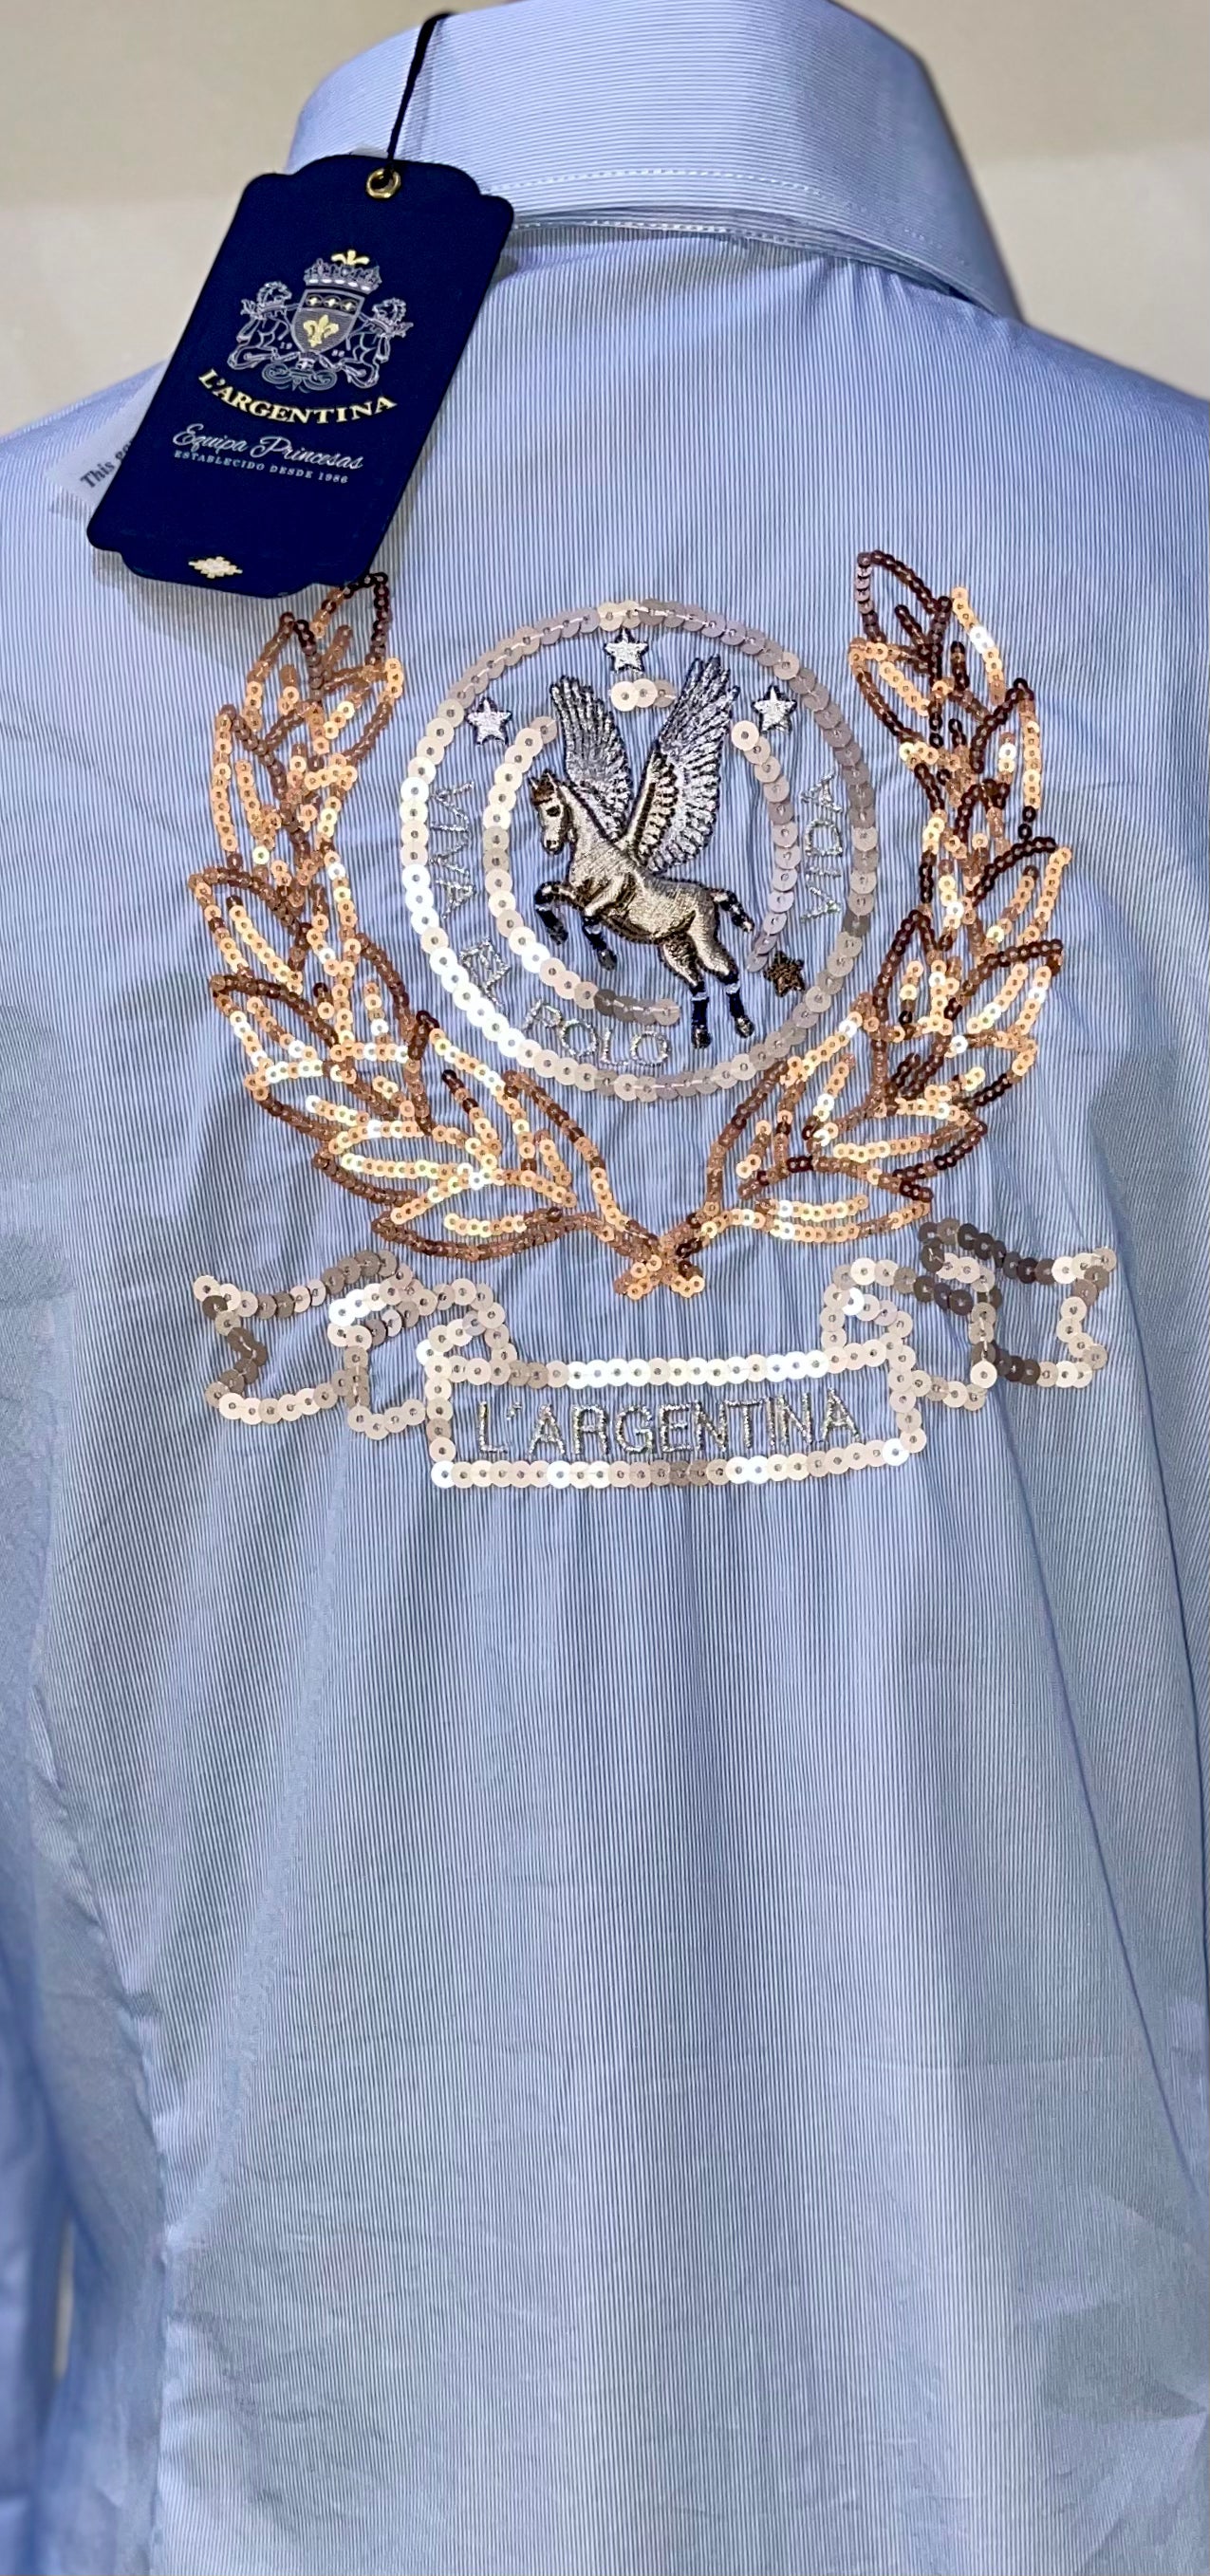 L’Argentina Badged Blue Shirt